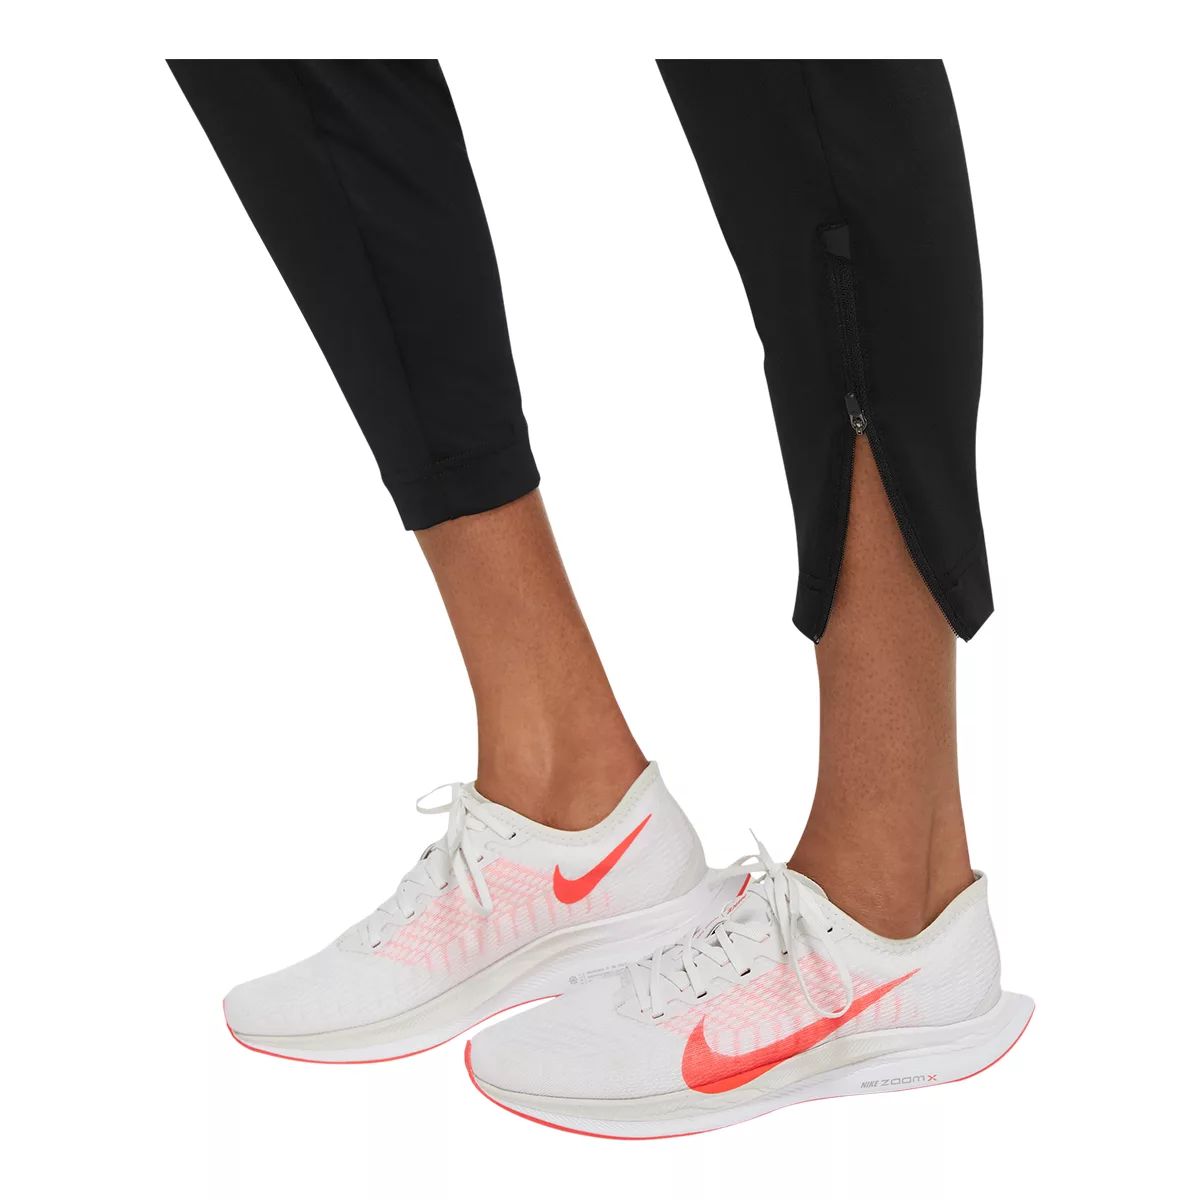 Nike Essential Women's Pants 7/8 Women's Running Walking Trousers